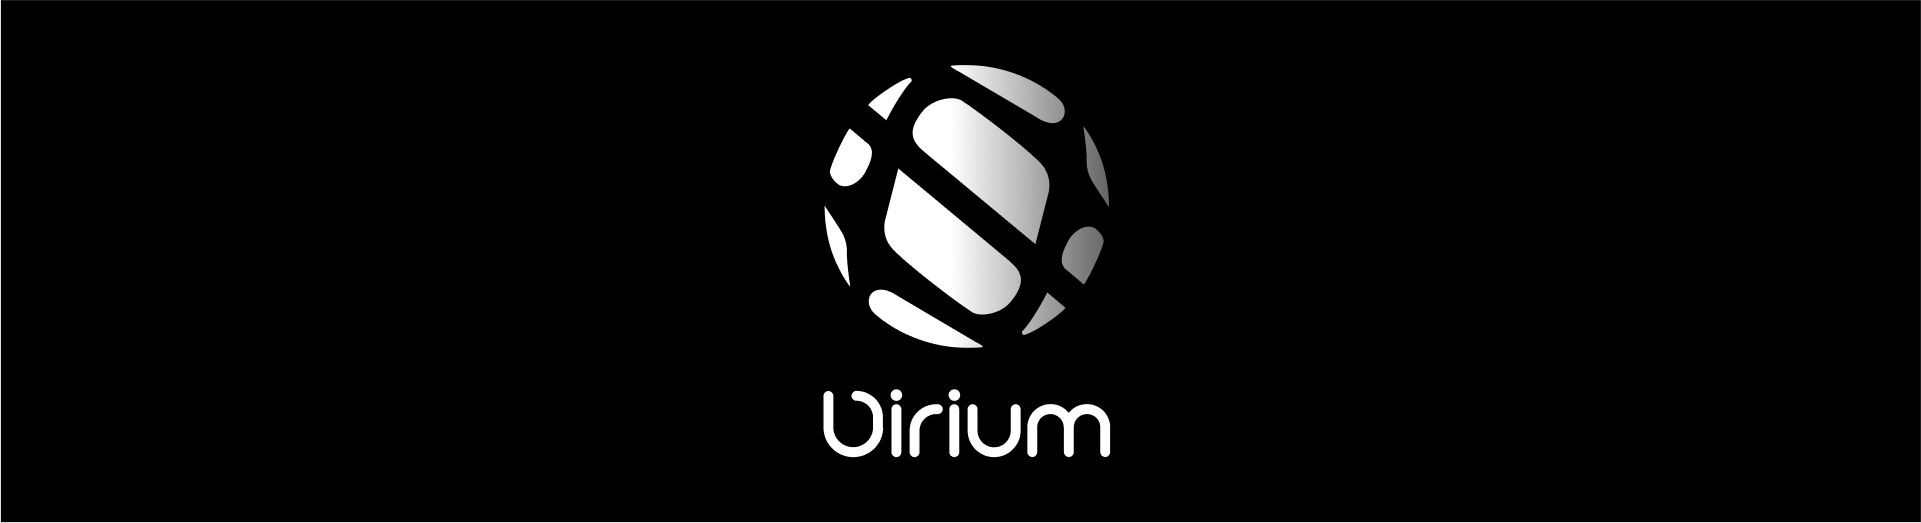 Banner with Virium logo